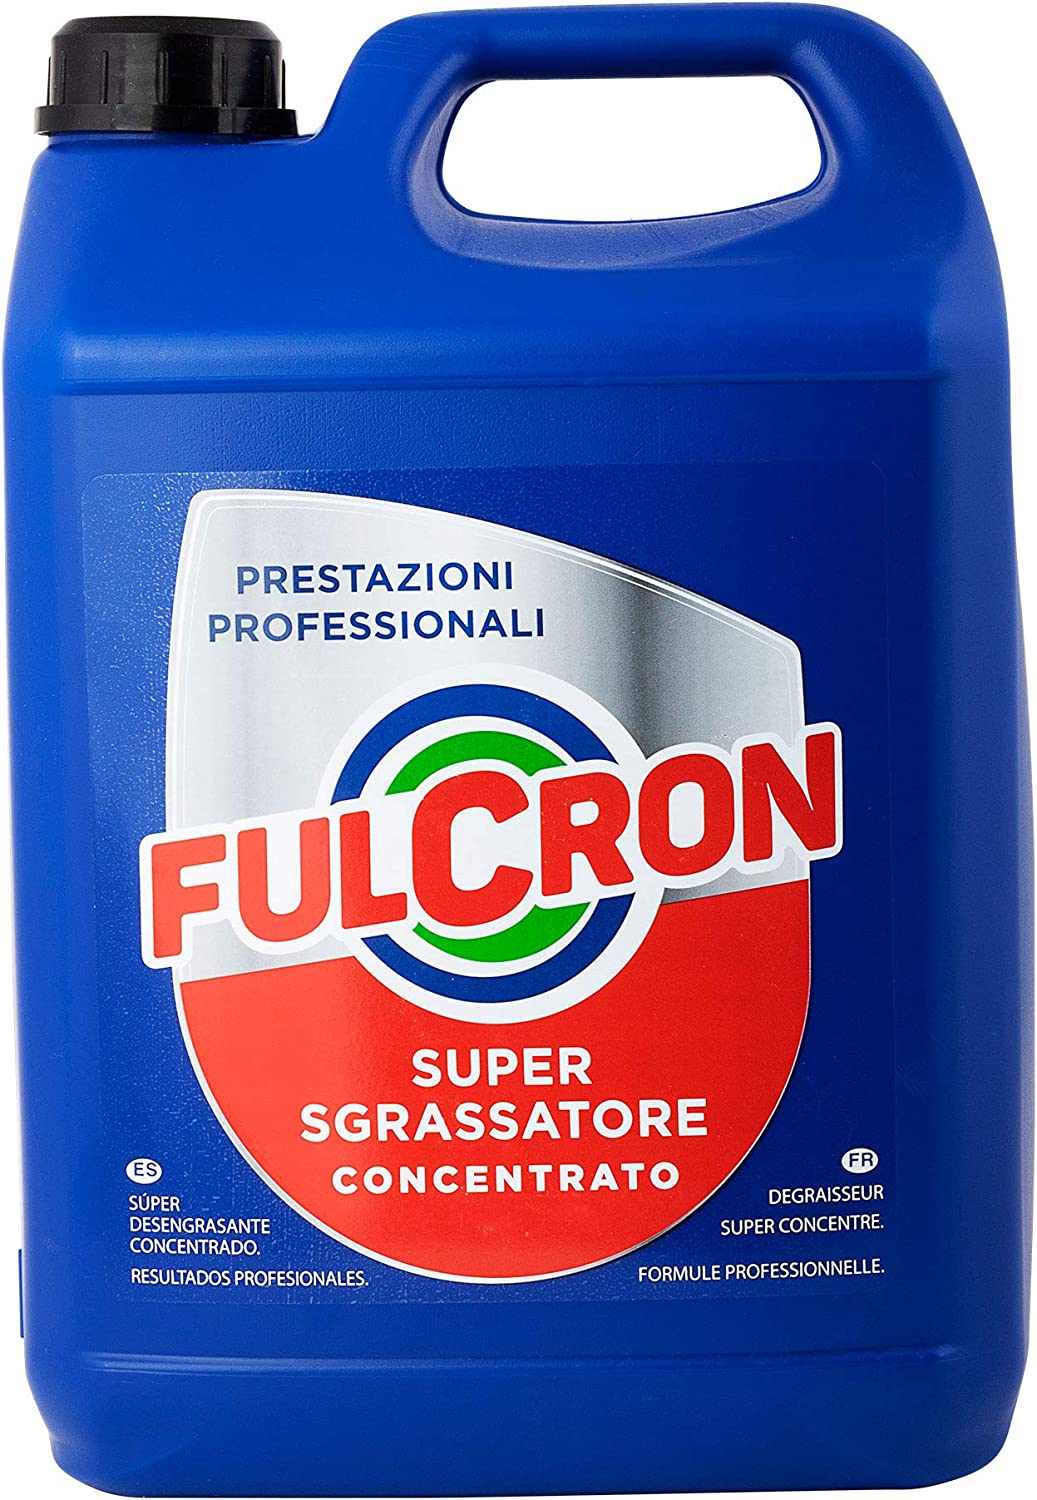 Fulcron super sgrassatore - Arexons 